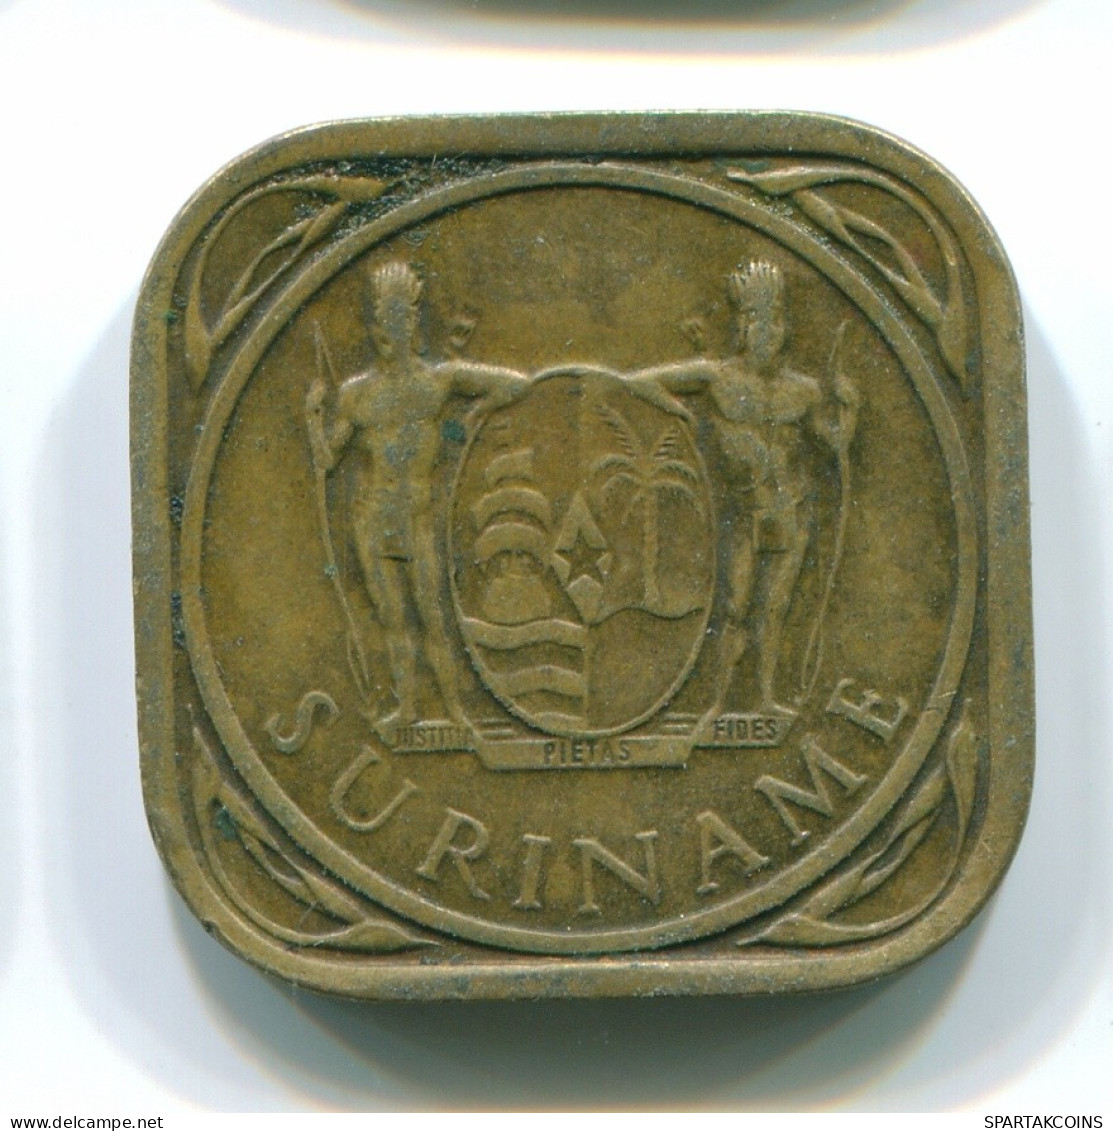 5 CENTS 1966 SURINAME Netherlands Nickel-Brass Colonial Coin #S12782.U.A - Surinam 1975 - ...